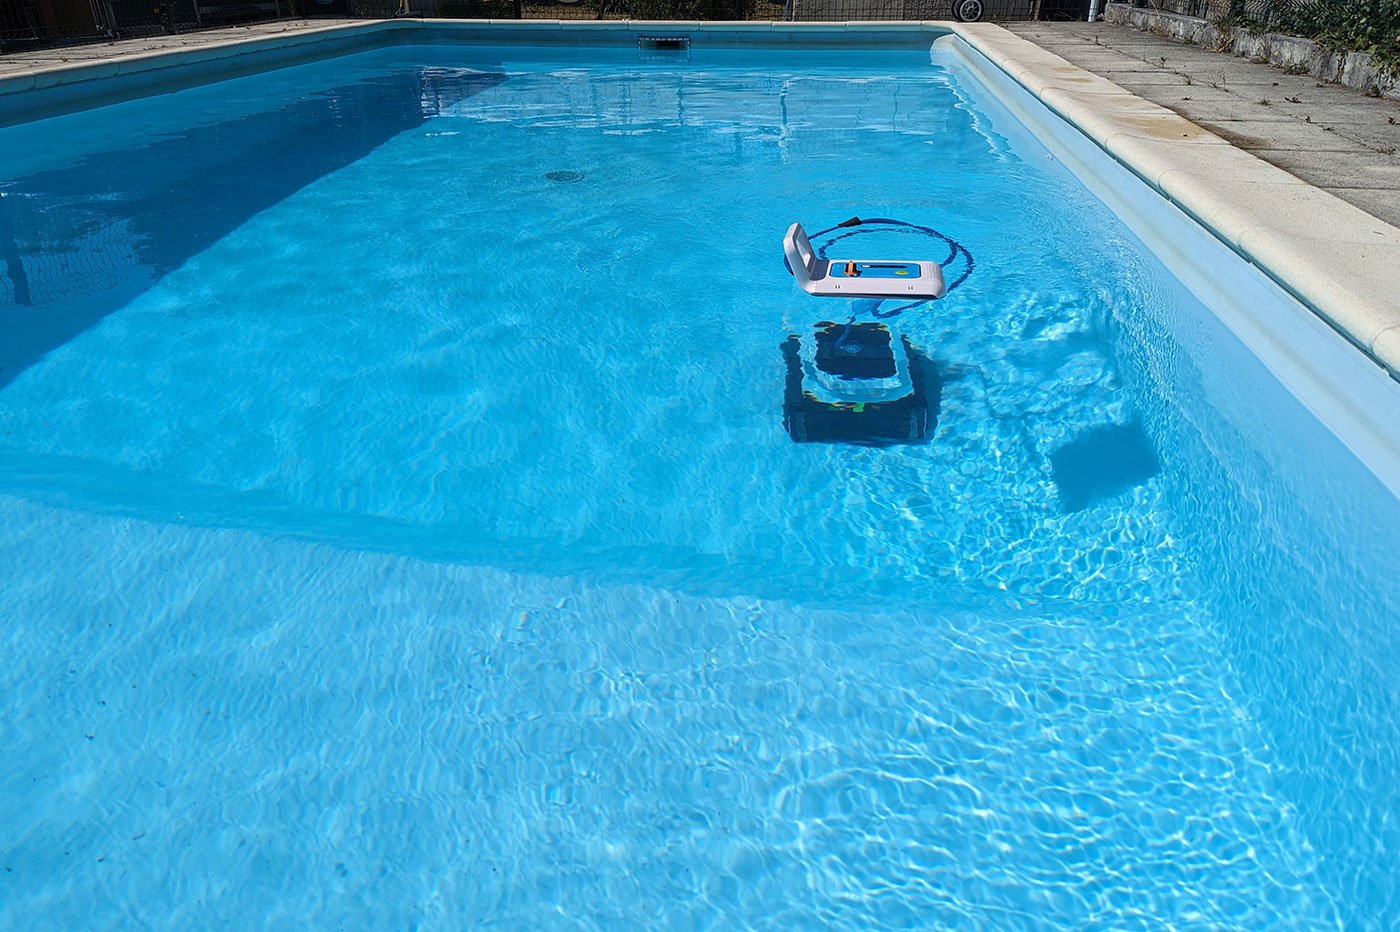 Robot piscine sans fil Latitude Top